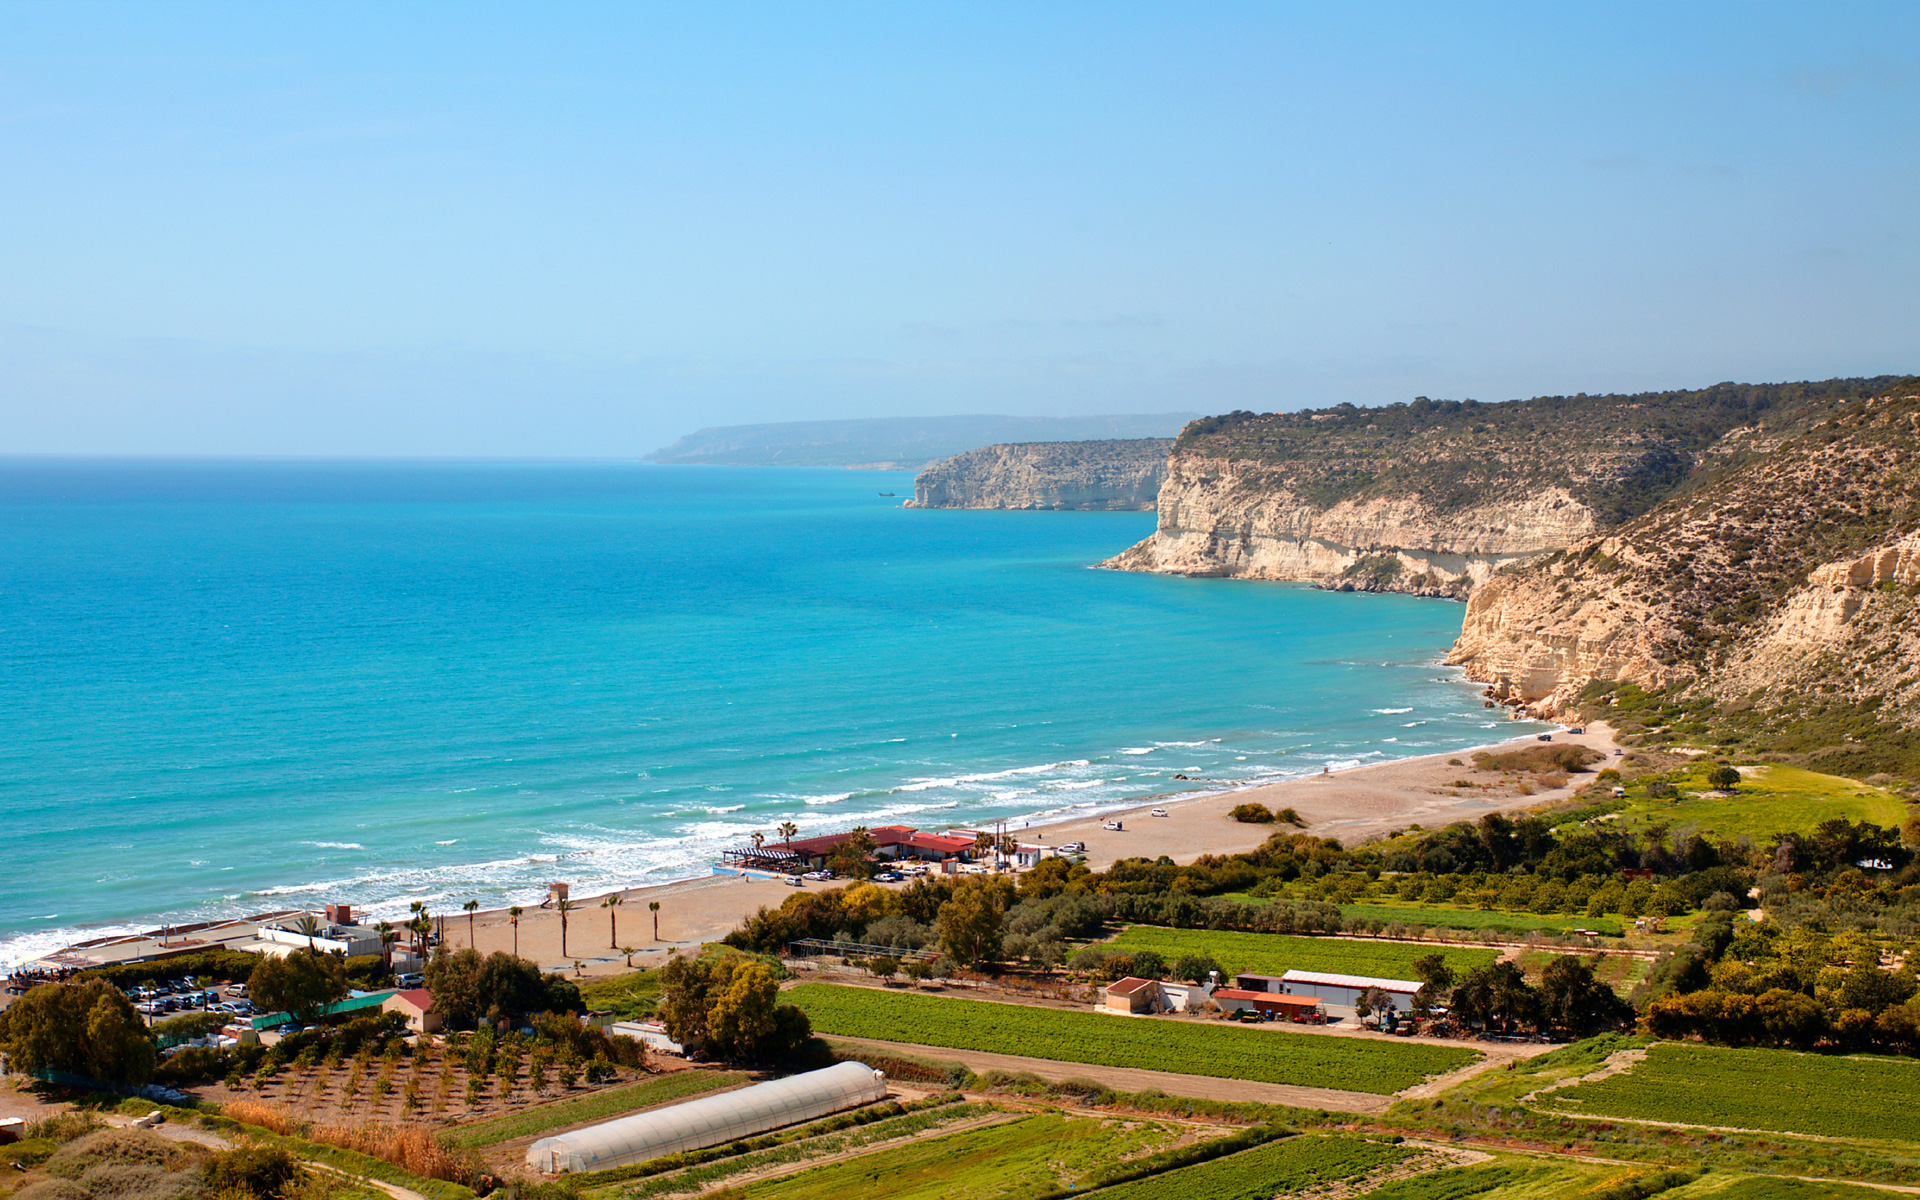 Kourion Beach in Cyprus